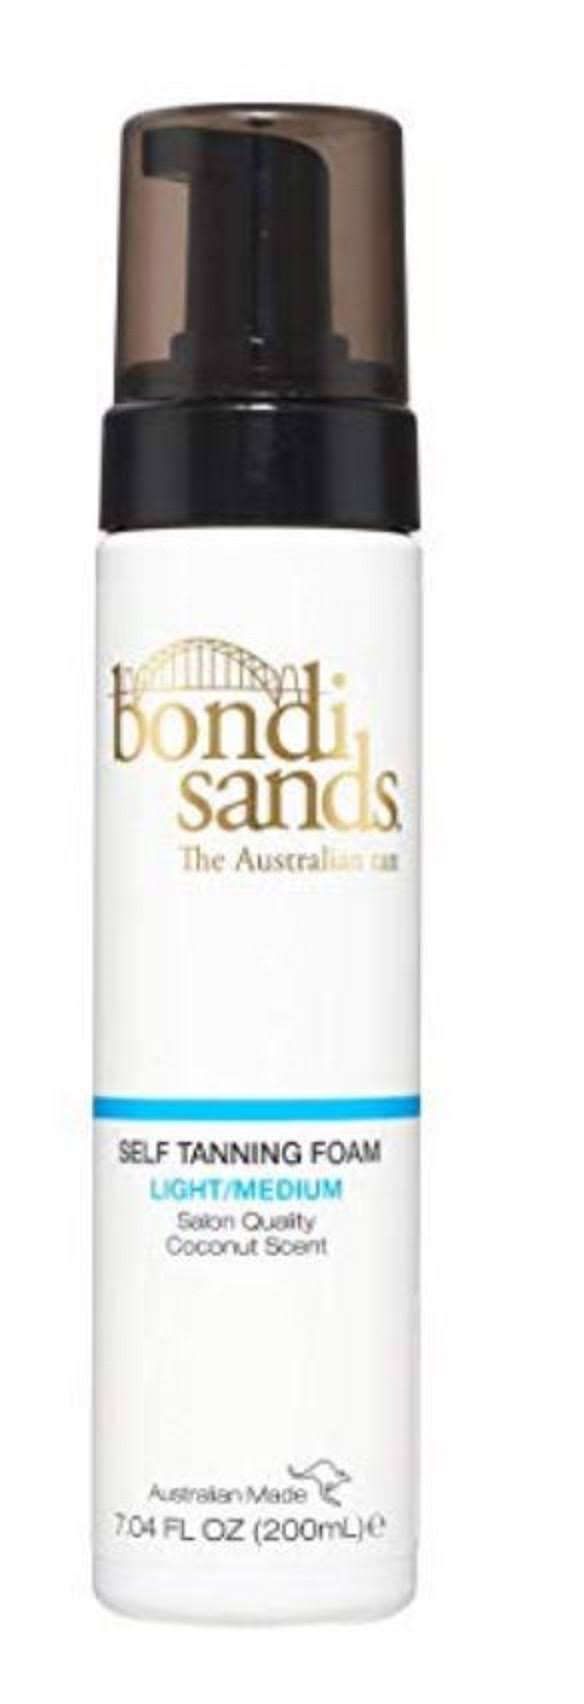 Bondi Sands Self Tanning Foam - Light-Medium 200ml